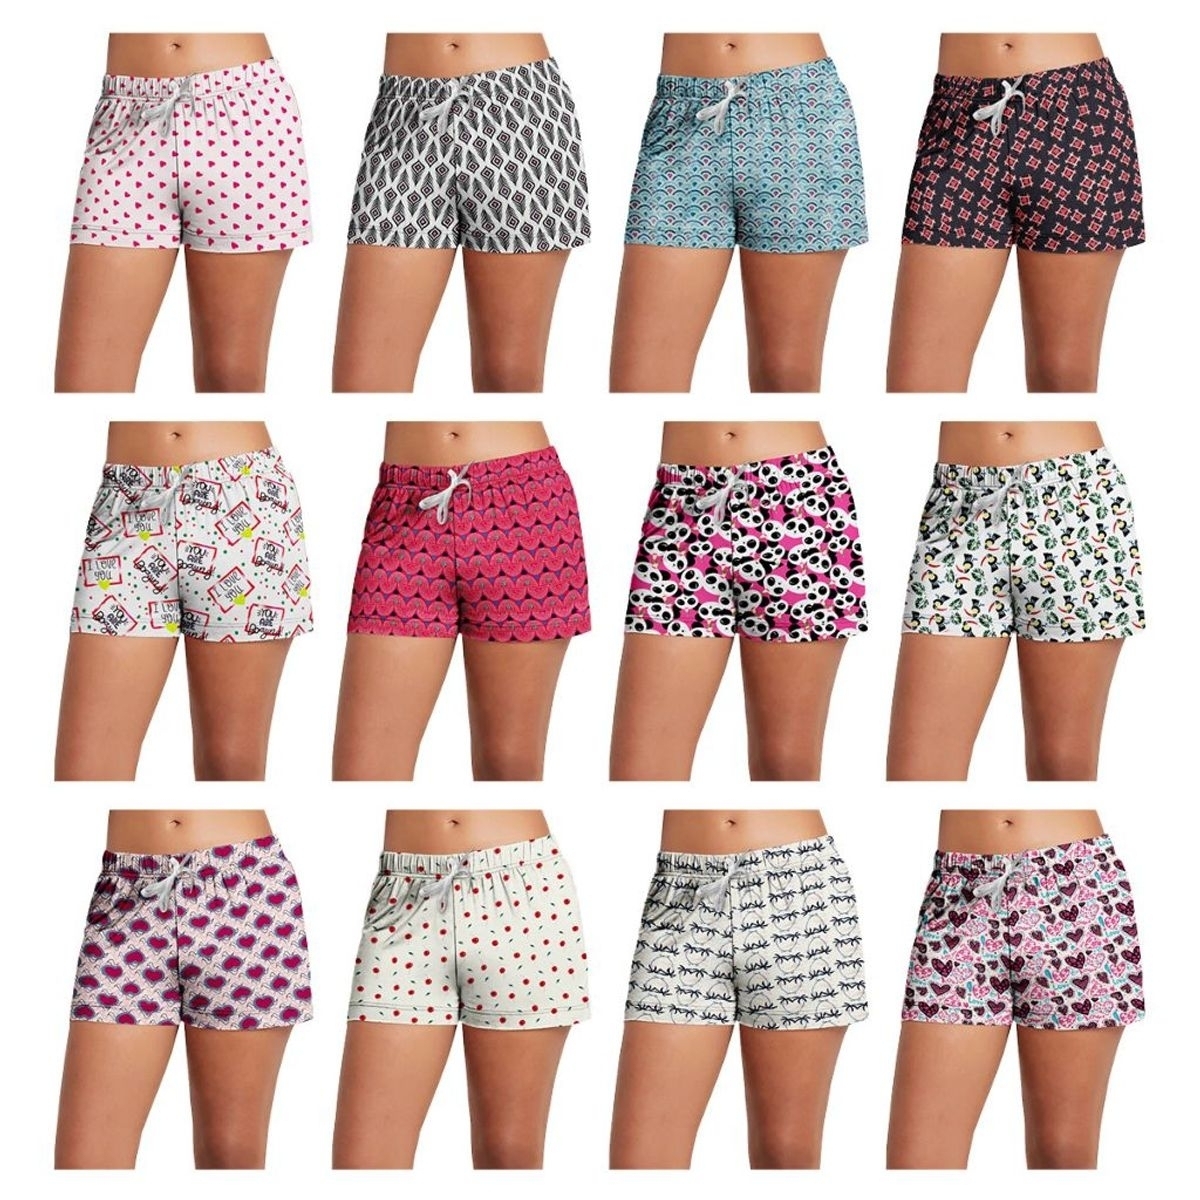 2-Pack: Women's Super-Soft Lightweight Fun Printed Comfy Lounge Bottom Pajama Shorts W/ Drawstring - Medium, Shapes